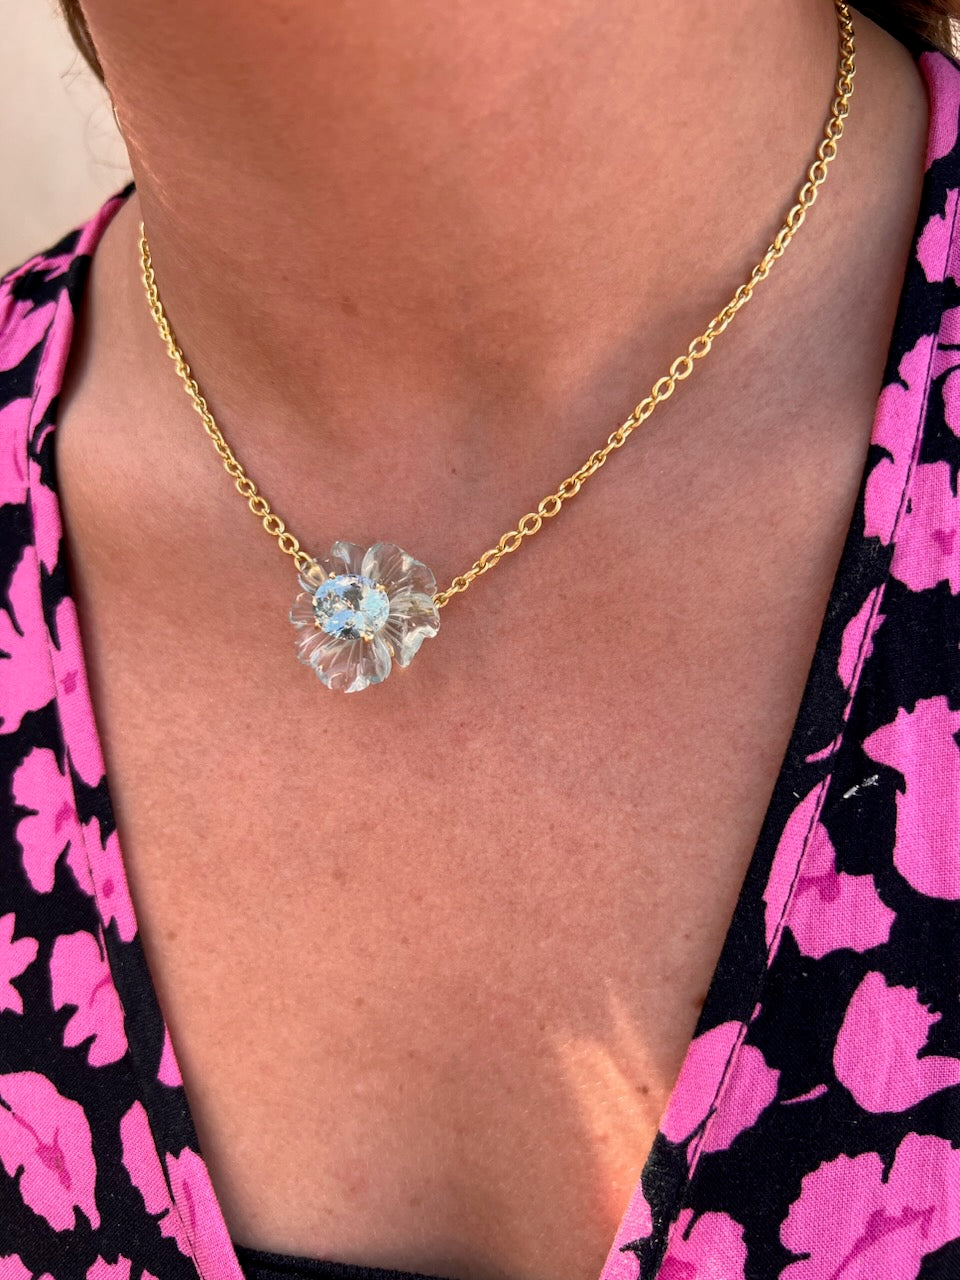 Irene Neuwirth Tropical Flower Aquamarine Necklace in Yellow Gold